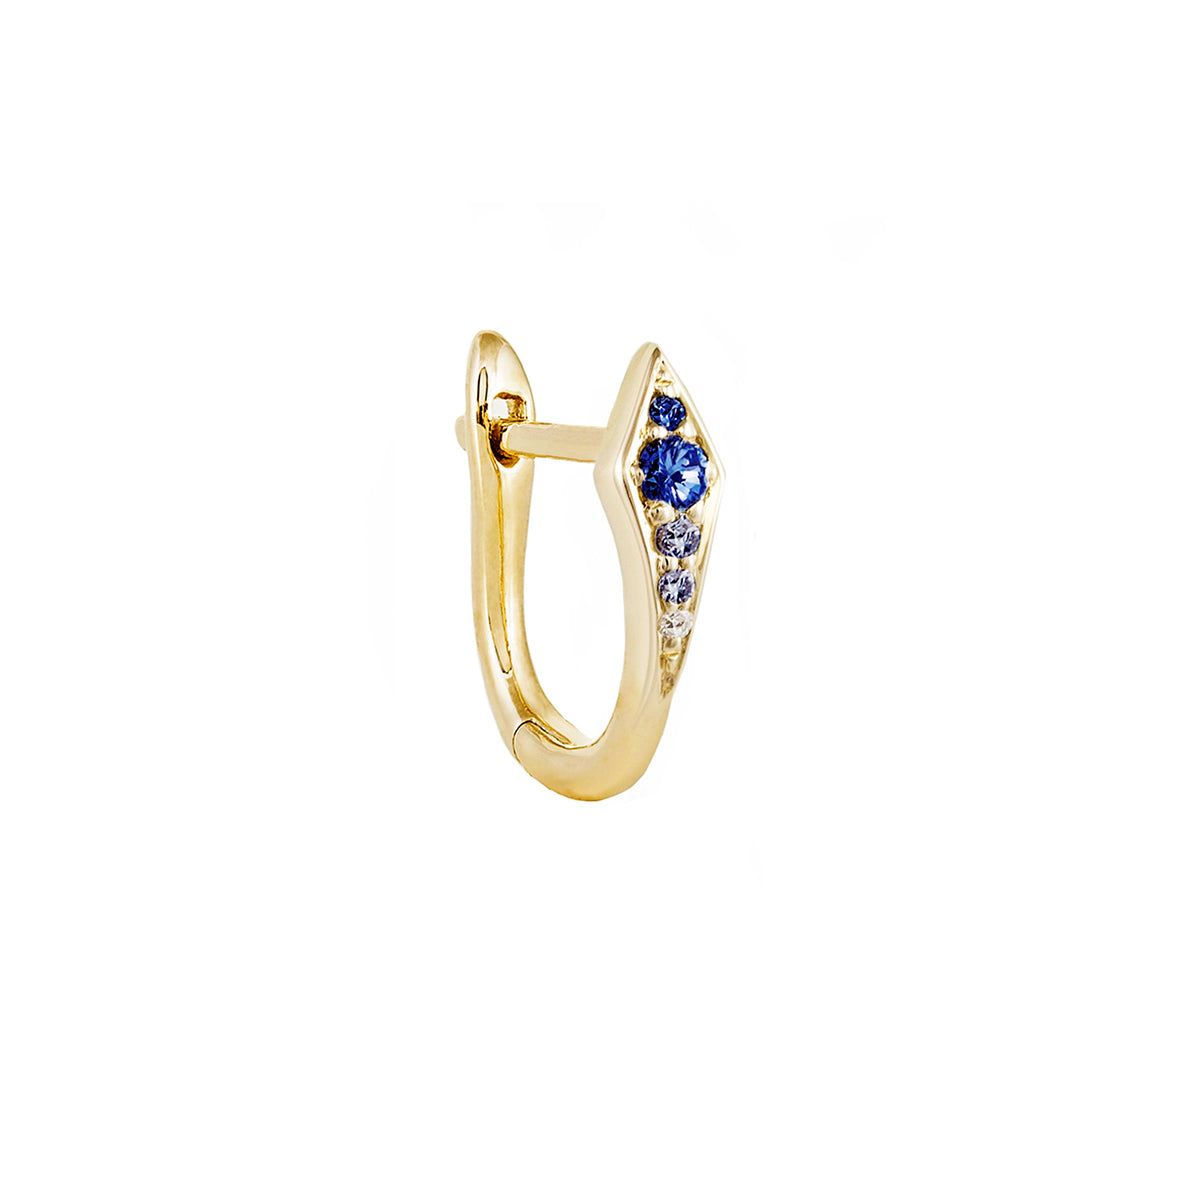 Metier by Tomfoolery gold huggie hoop with sapphires